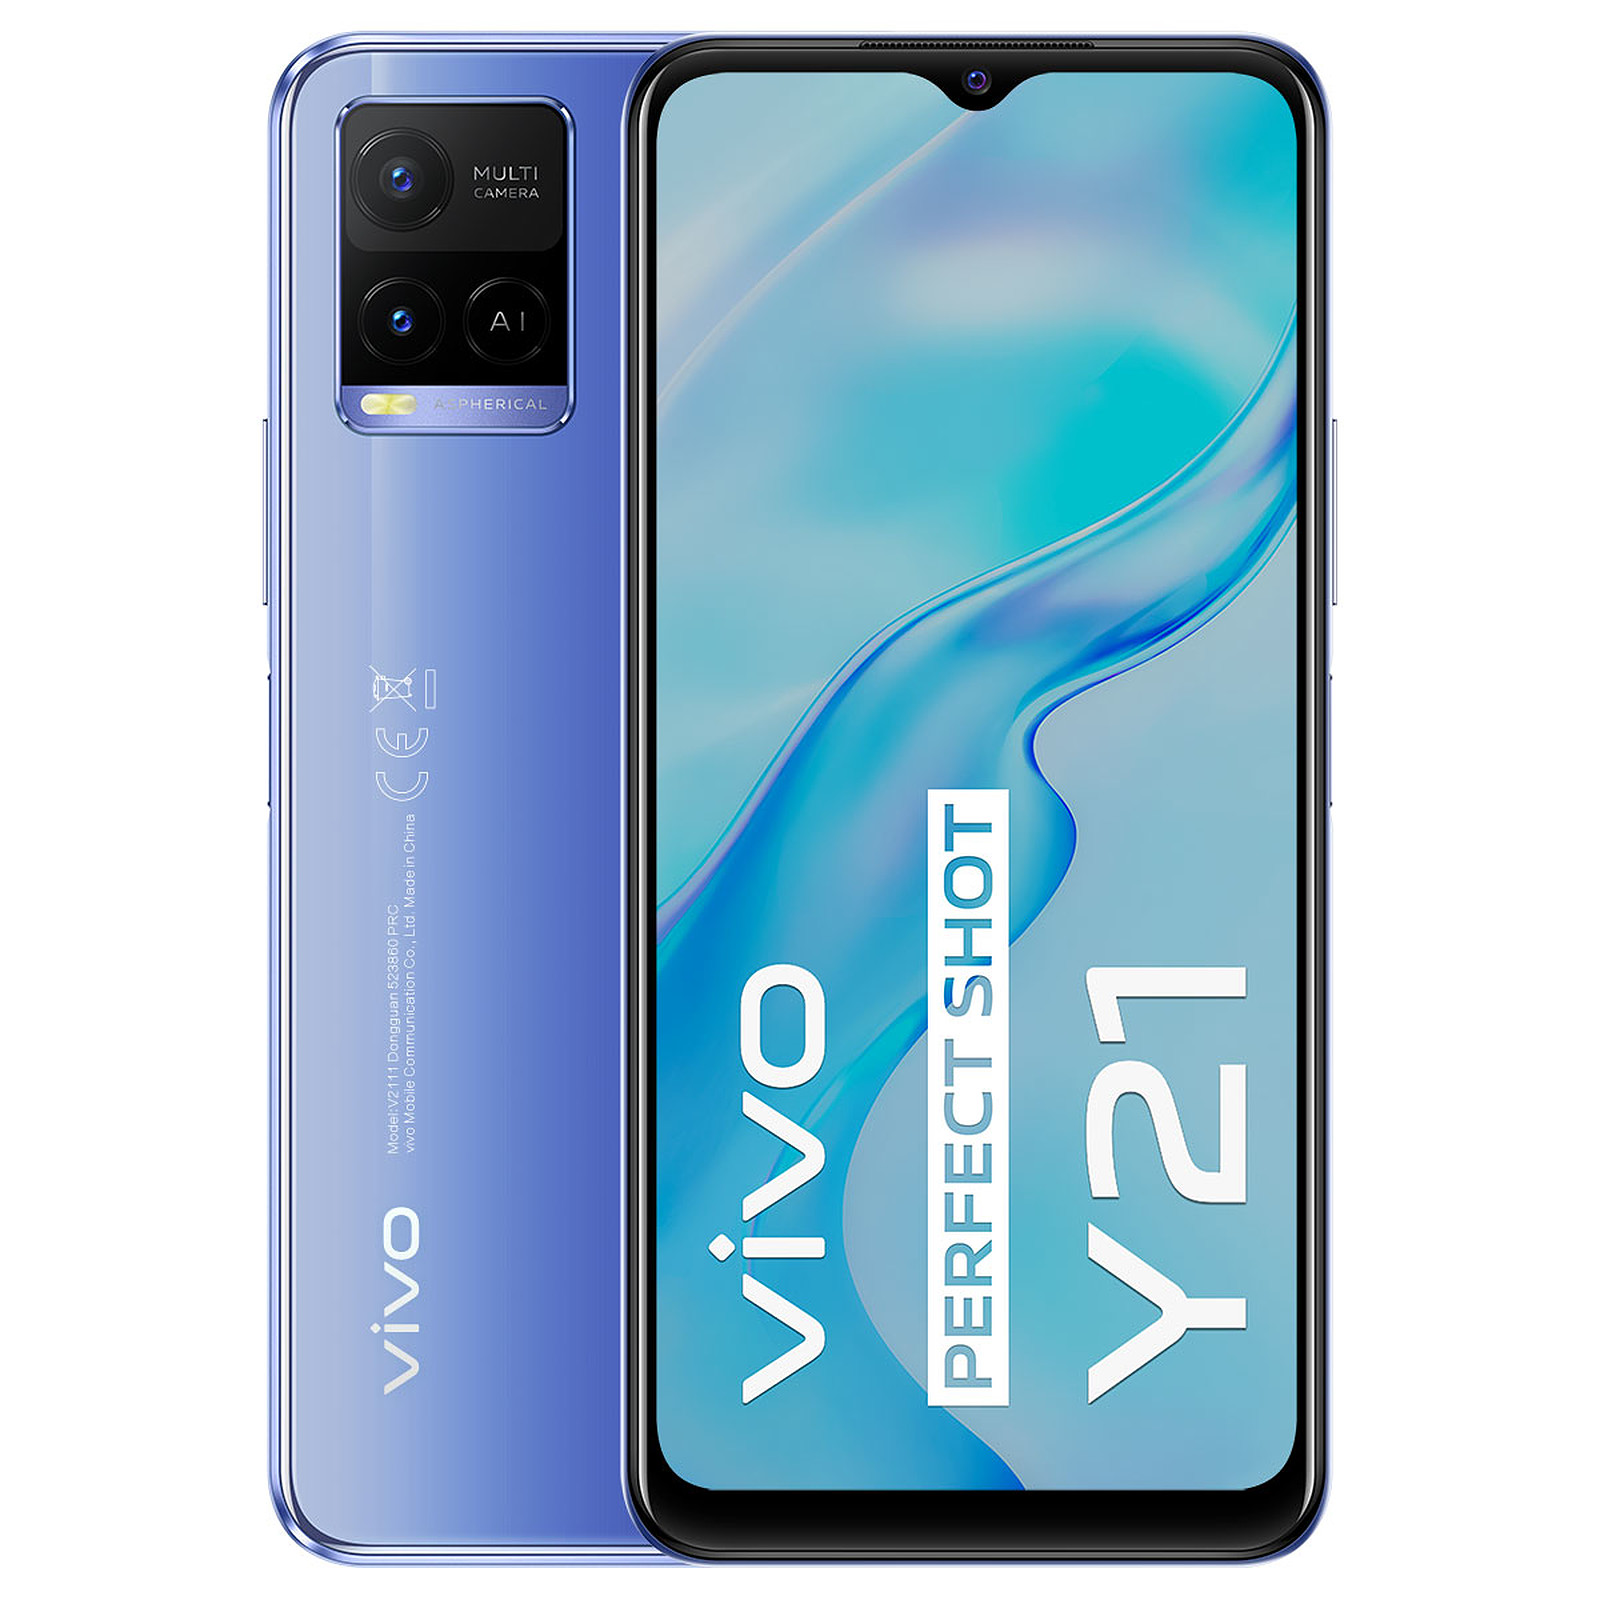 Vivo Y21 Bleu Metallique (4 Go / 64 Go) - Mobile & smartphone Vivo